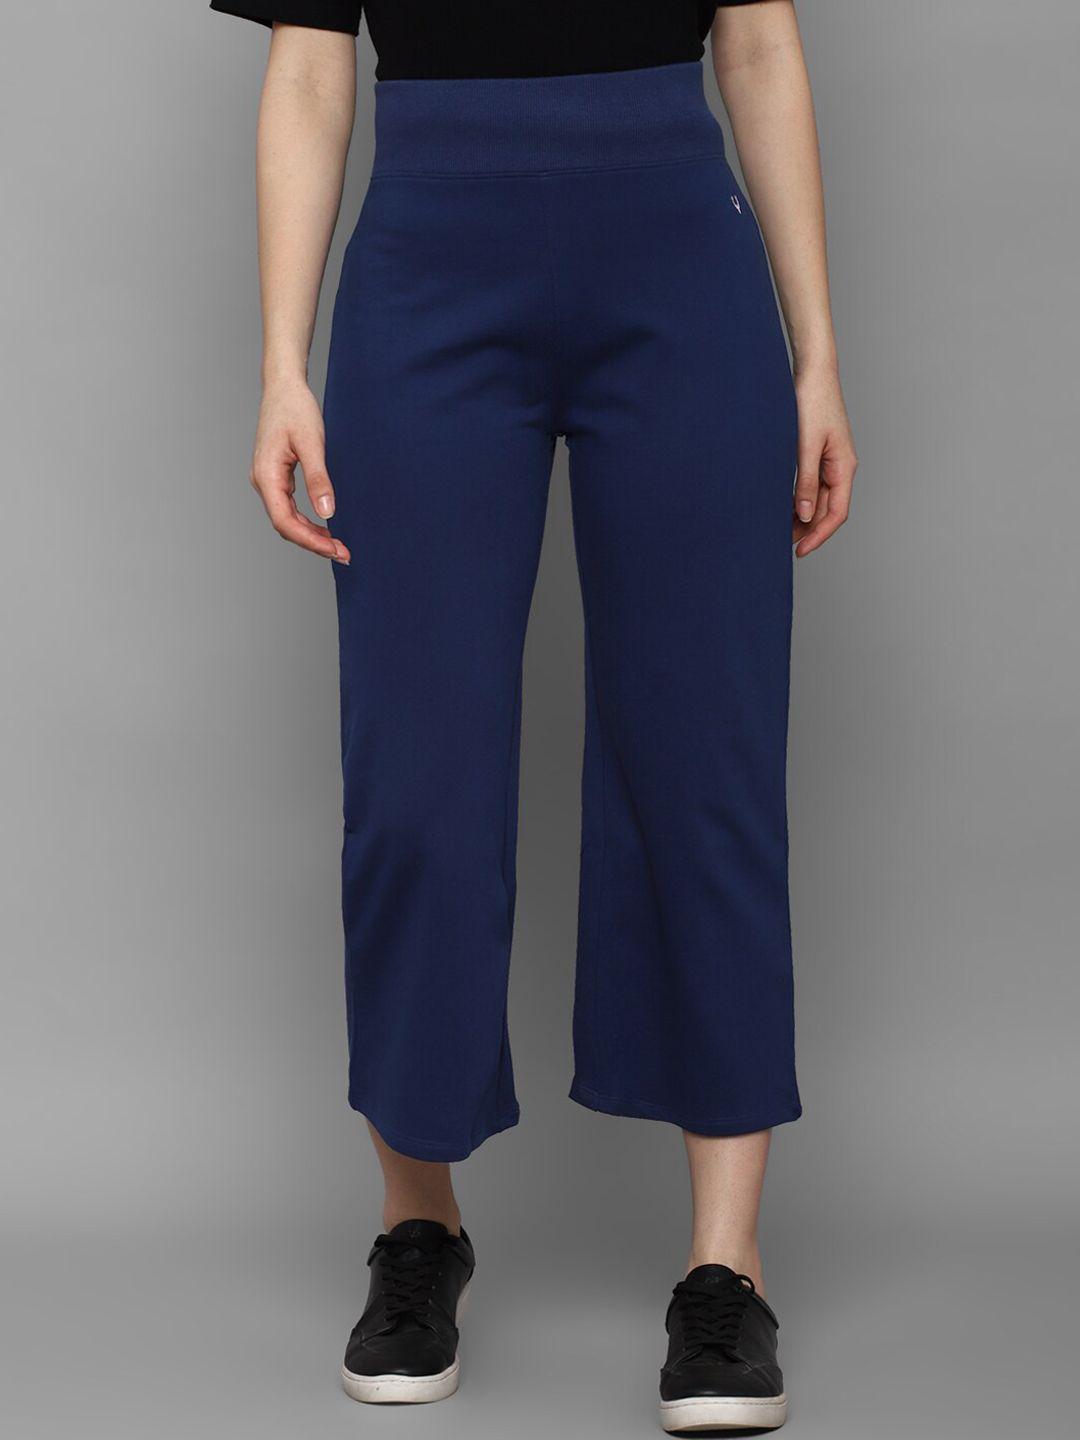 allen-solly-woman-women-navy-blue-culottes-trousers